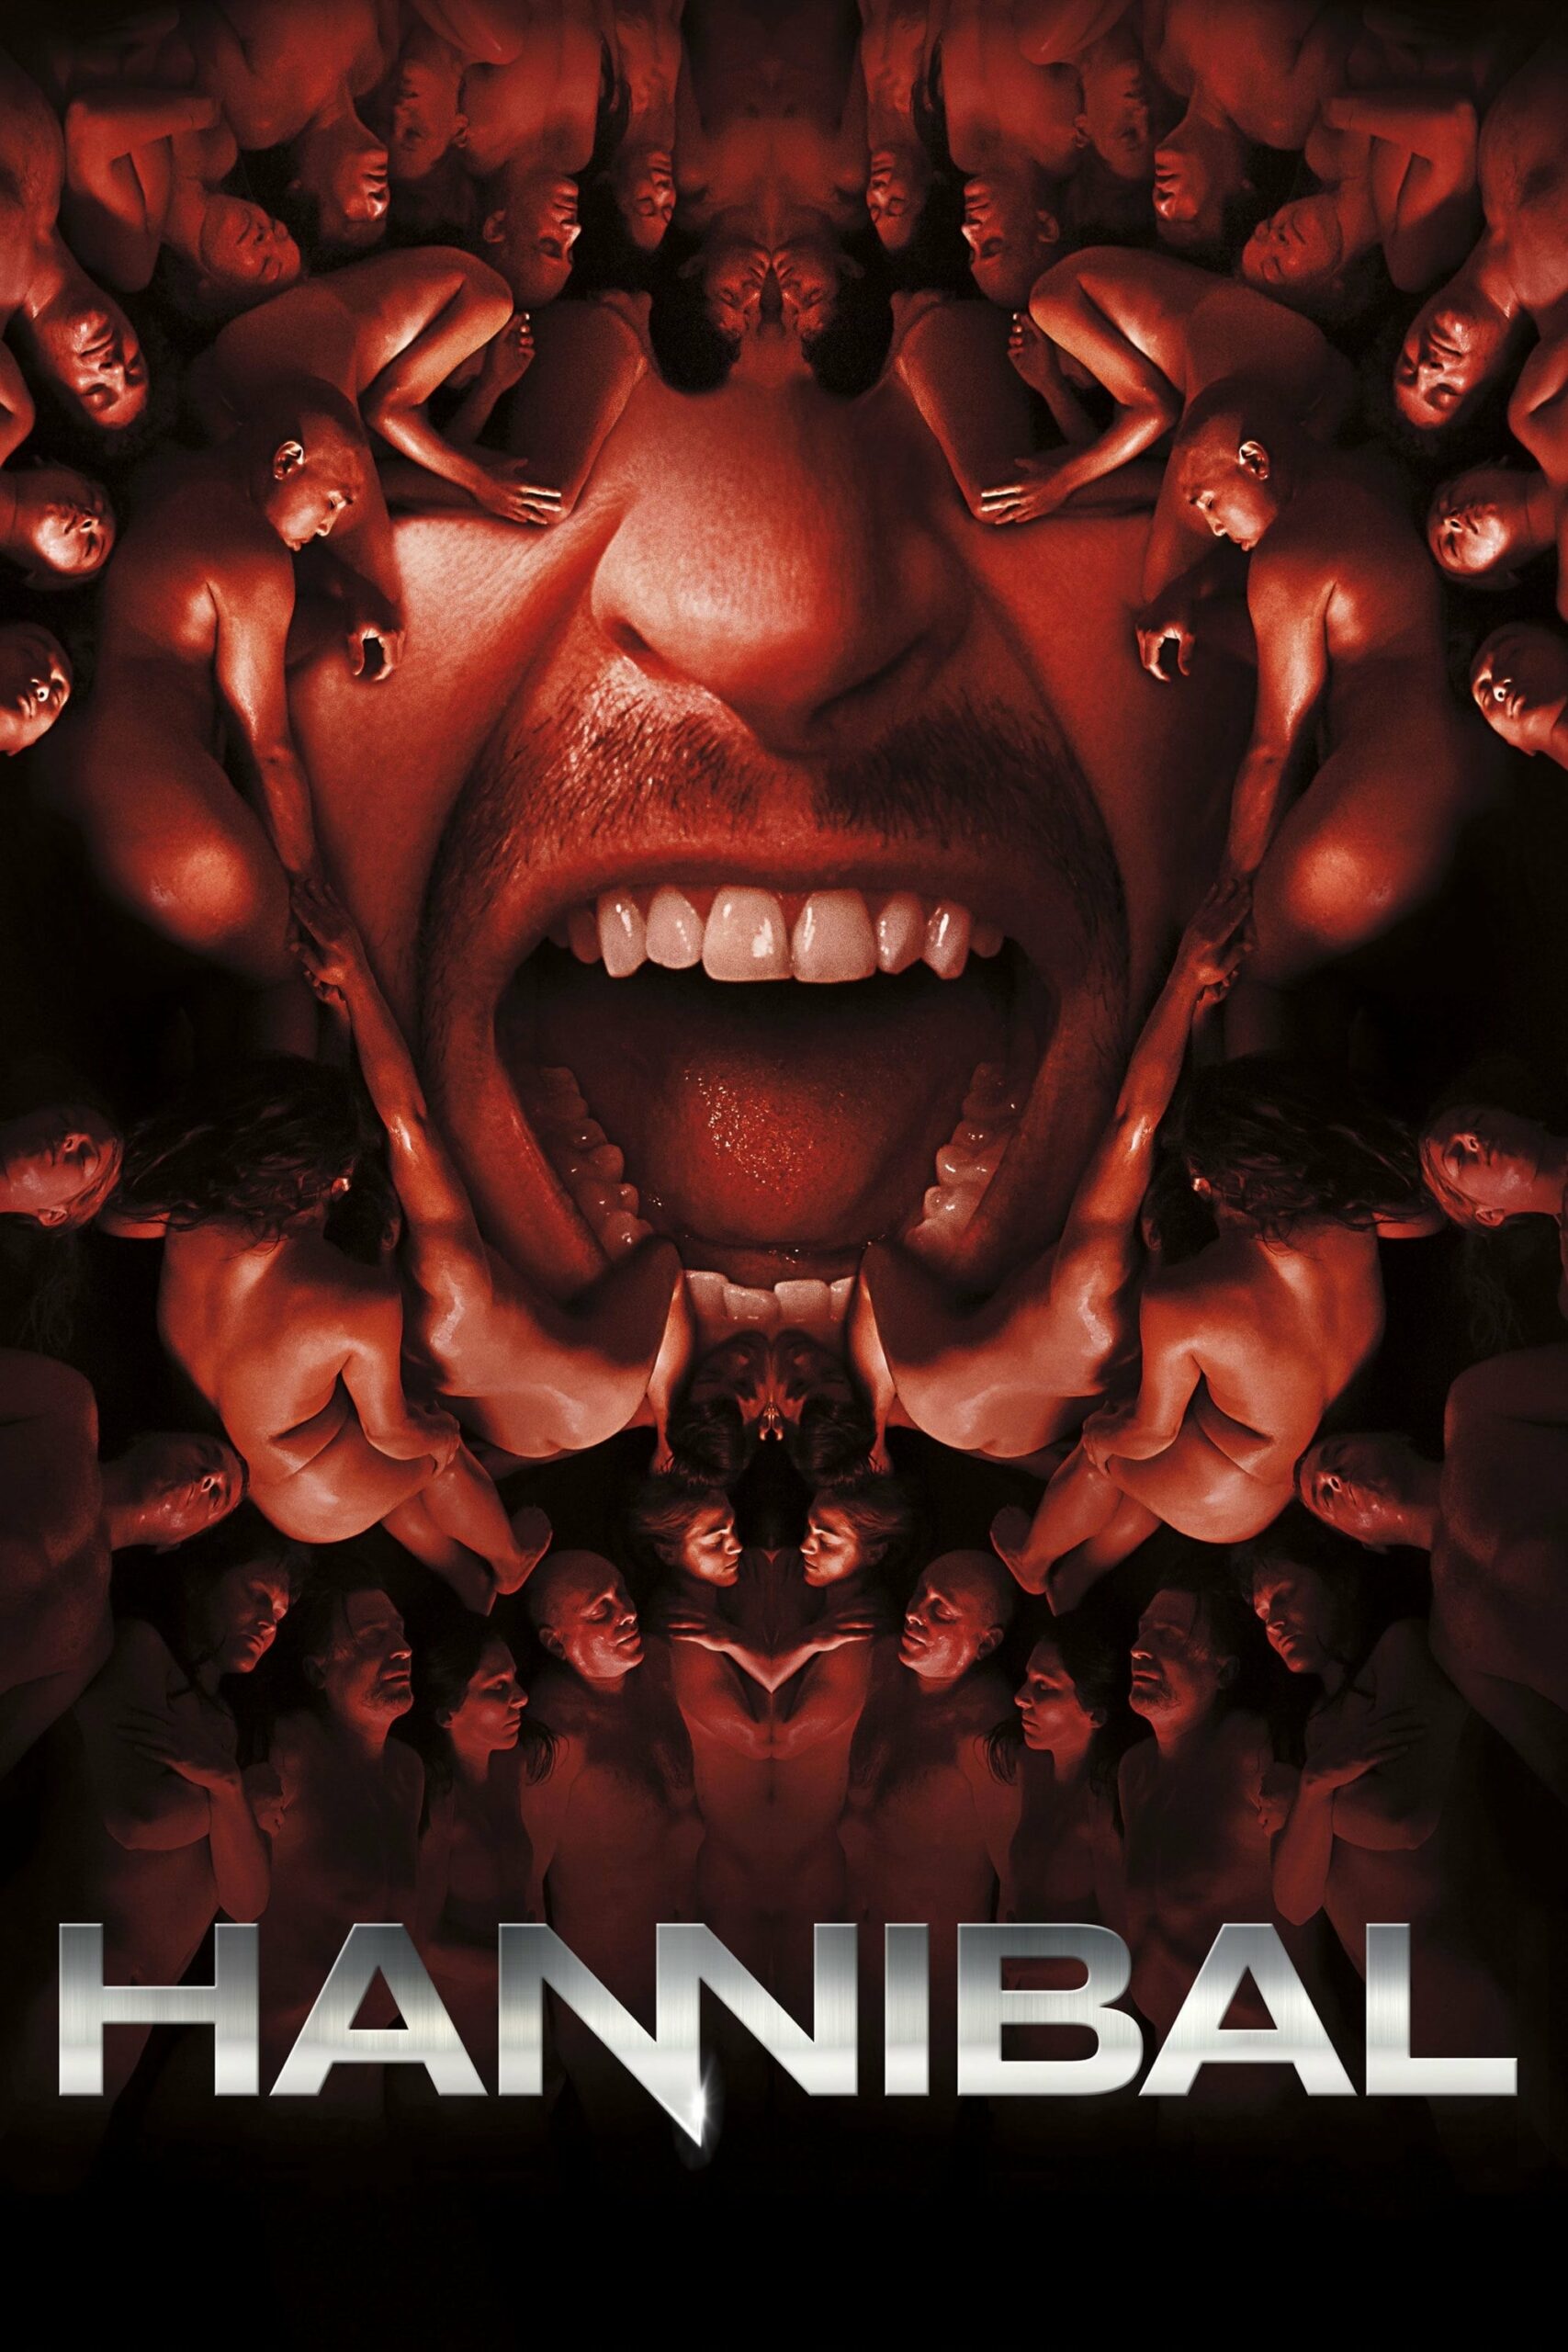 Plakát pro film “Hannibal”